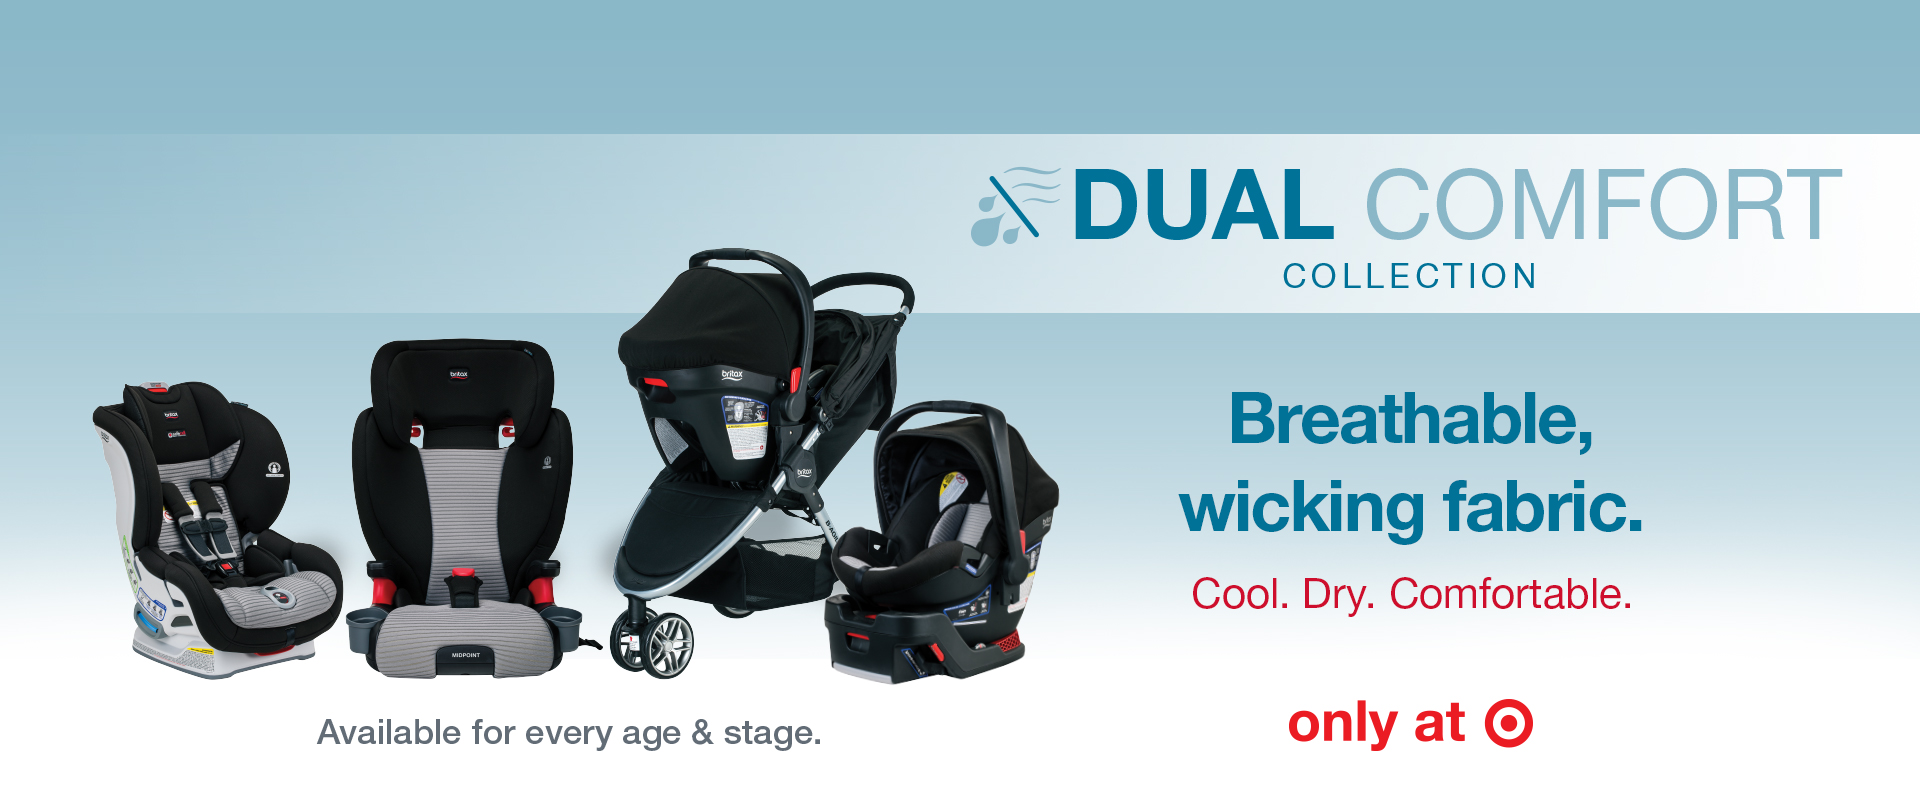 britax dual comfort stroller